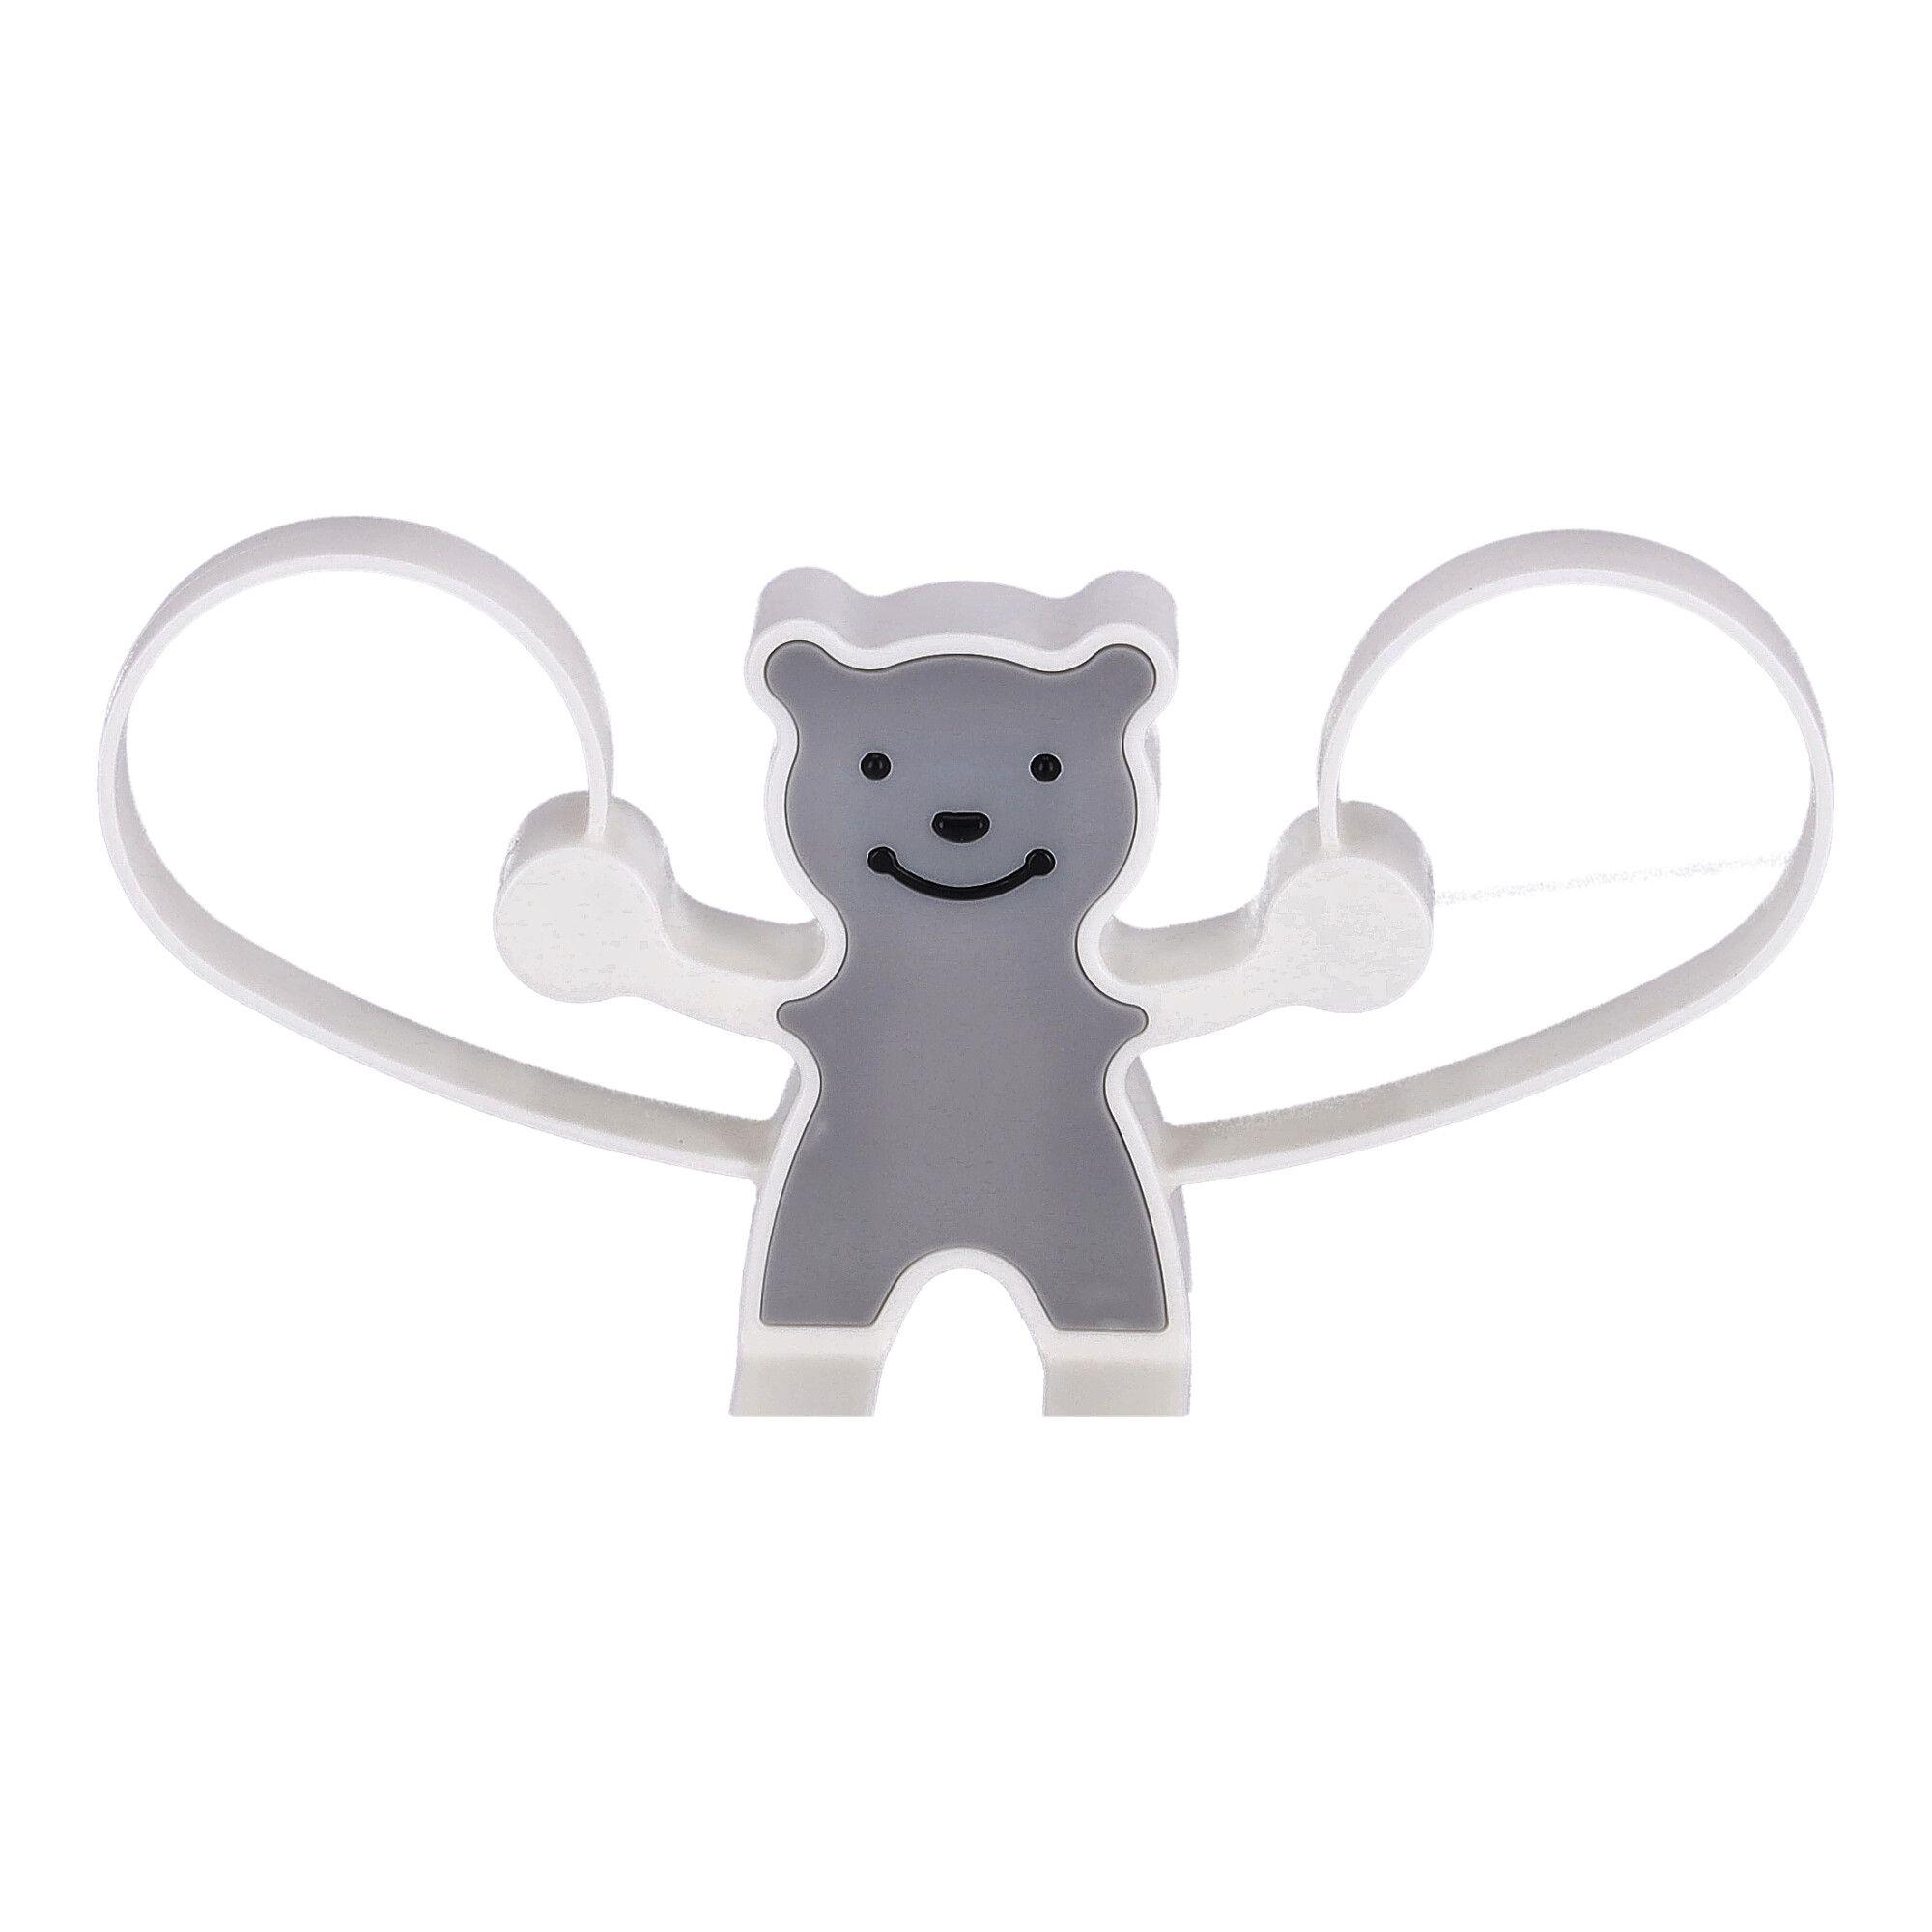 Multifunctional hanger with teddy bear - gray.